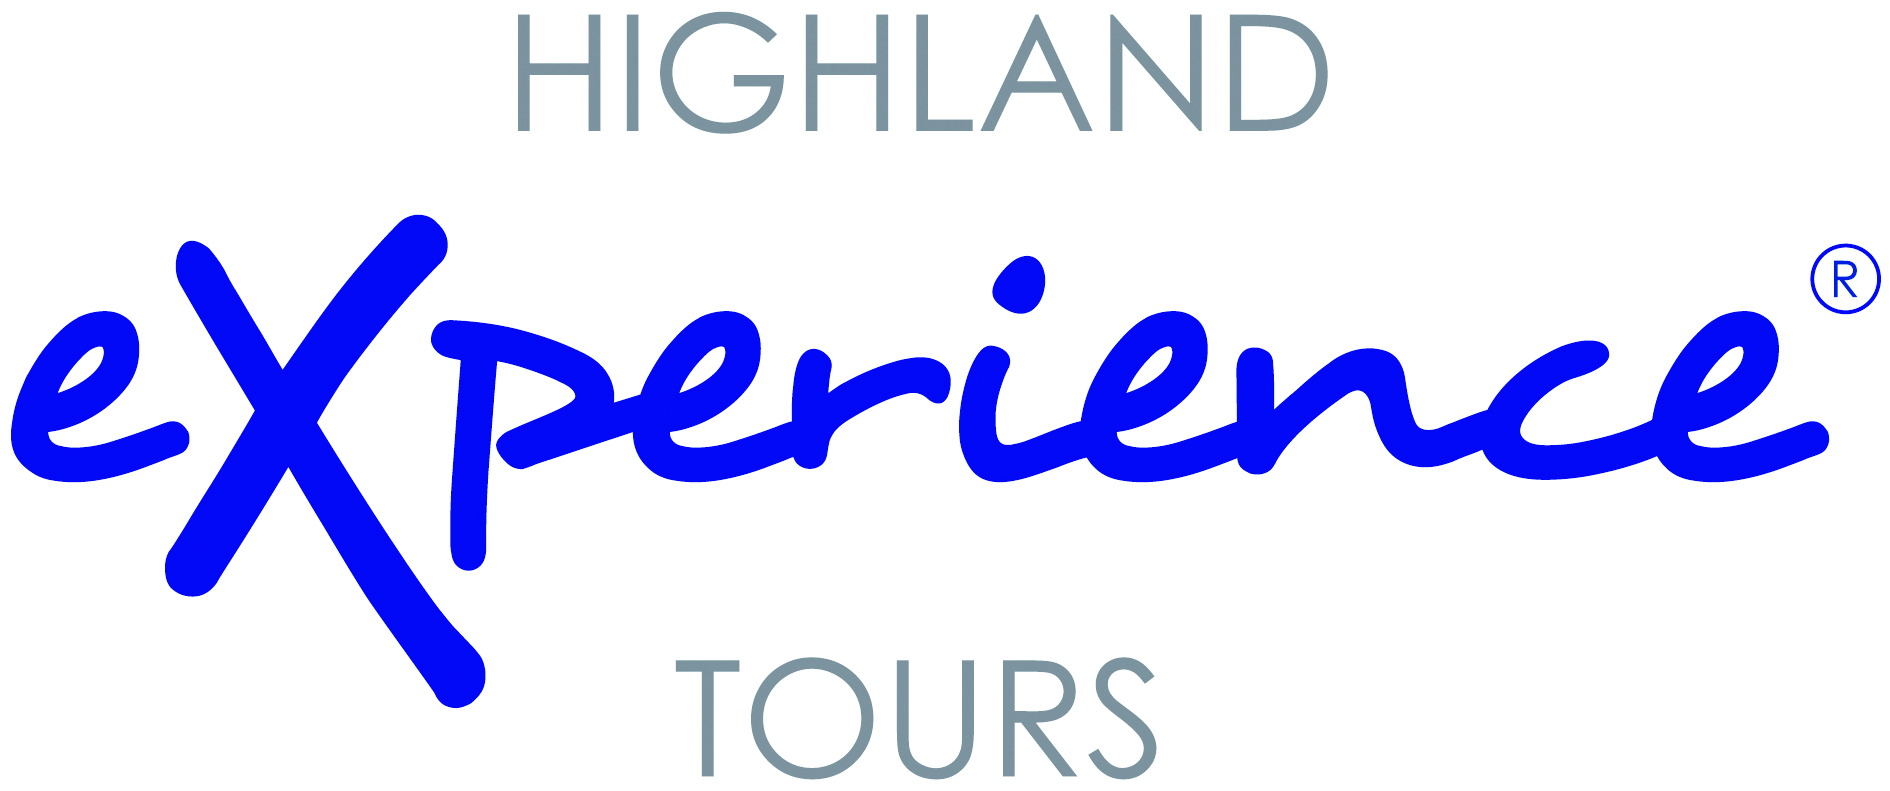 Highland experience